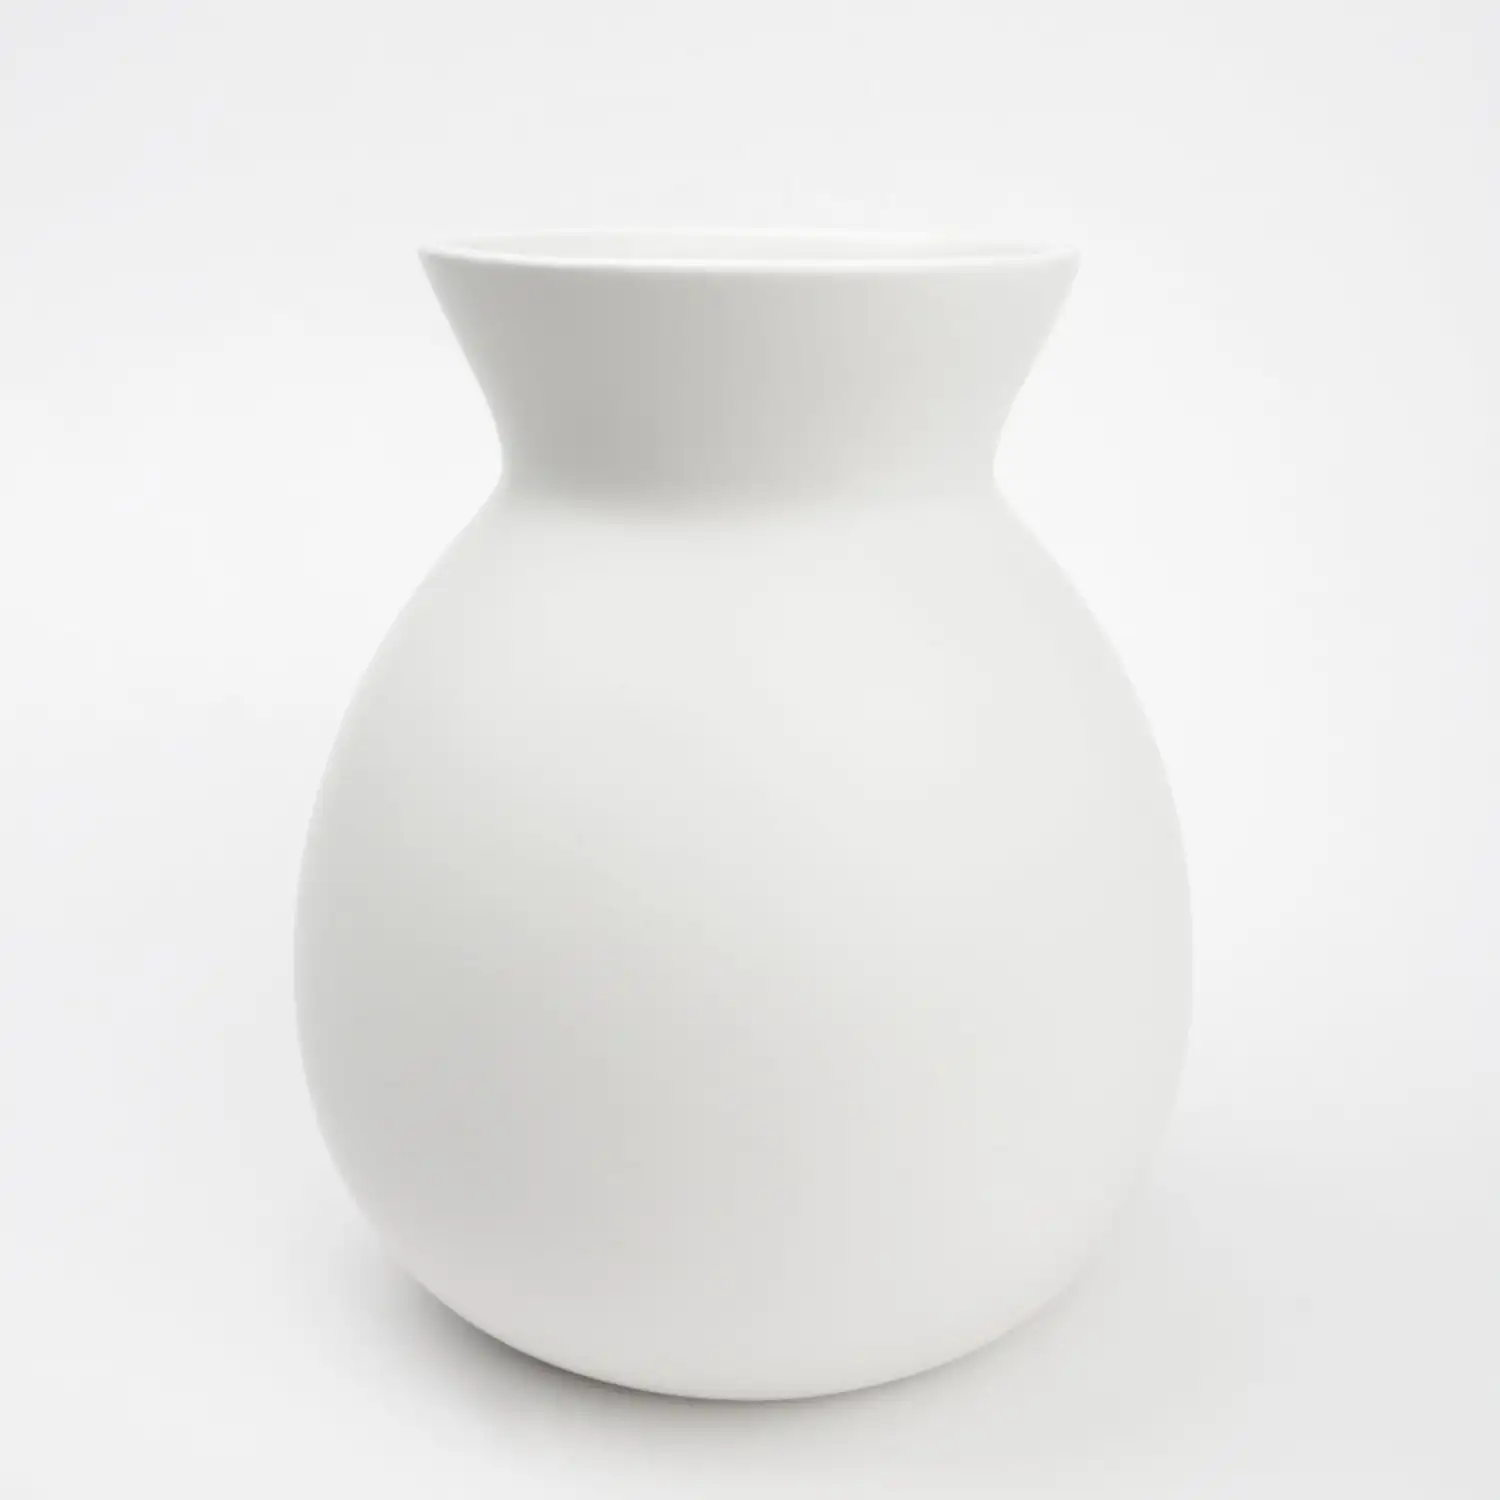 Vaso in ceramica con finitura bianca solida da 6,75 pollici x 8 pollici